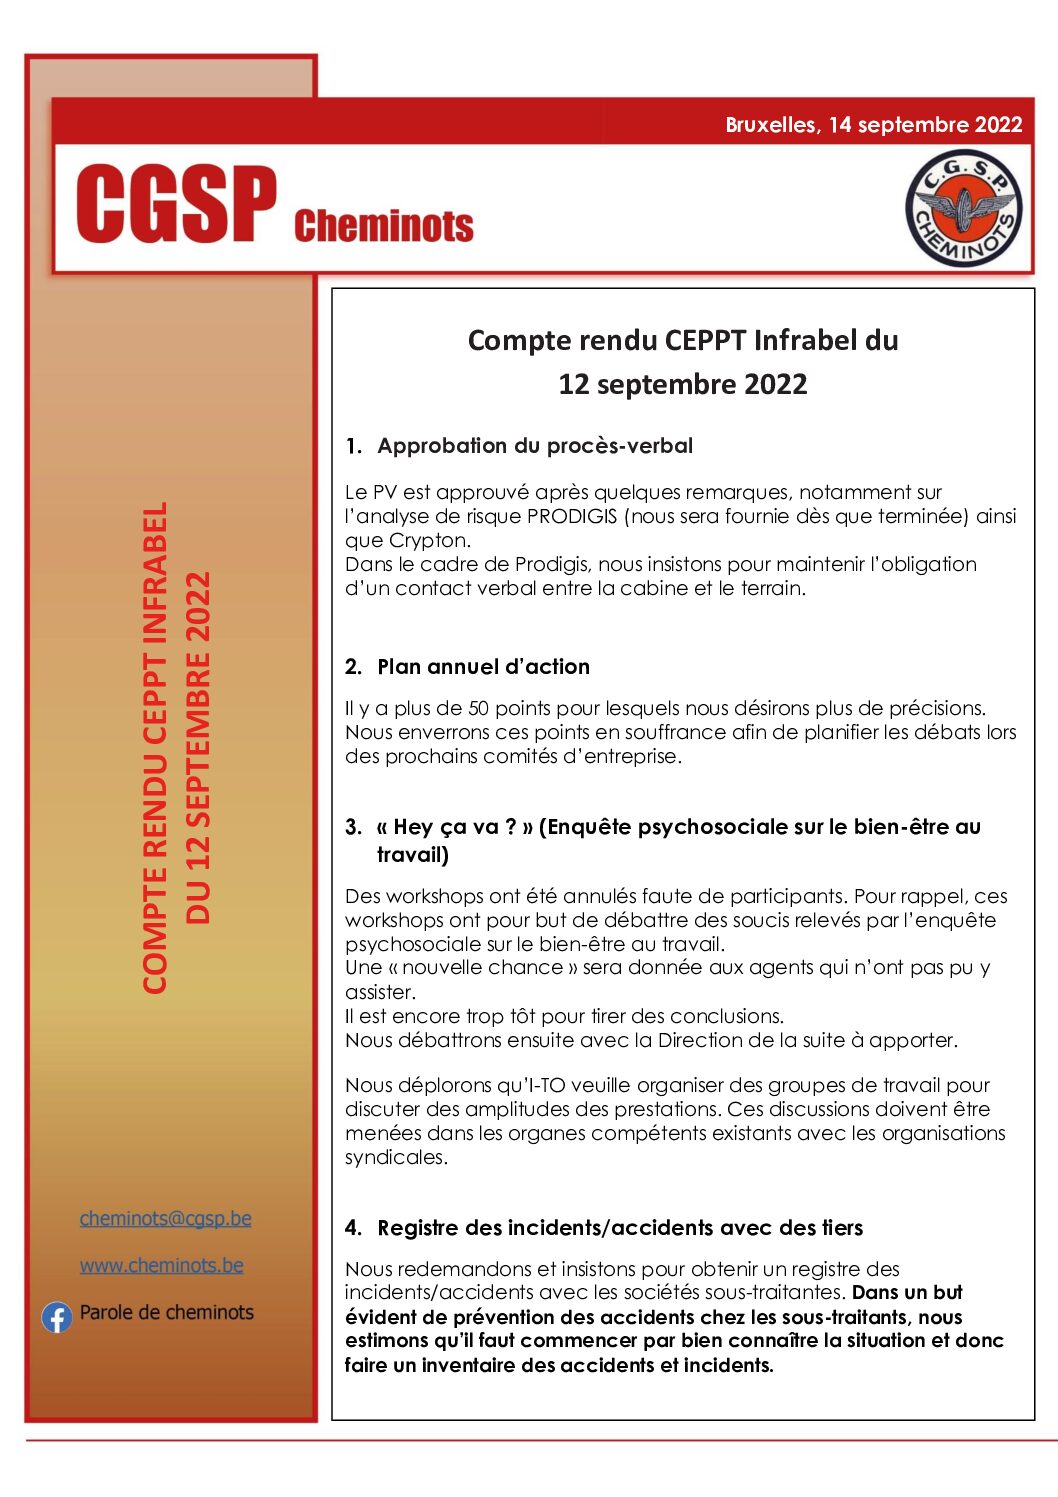 Compte rendu CEPPT du 12/09/2022